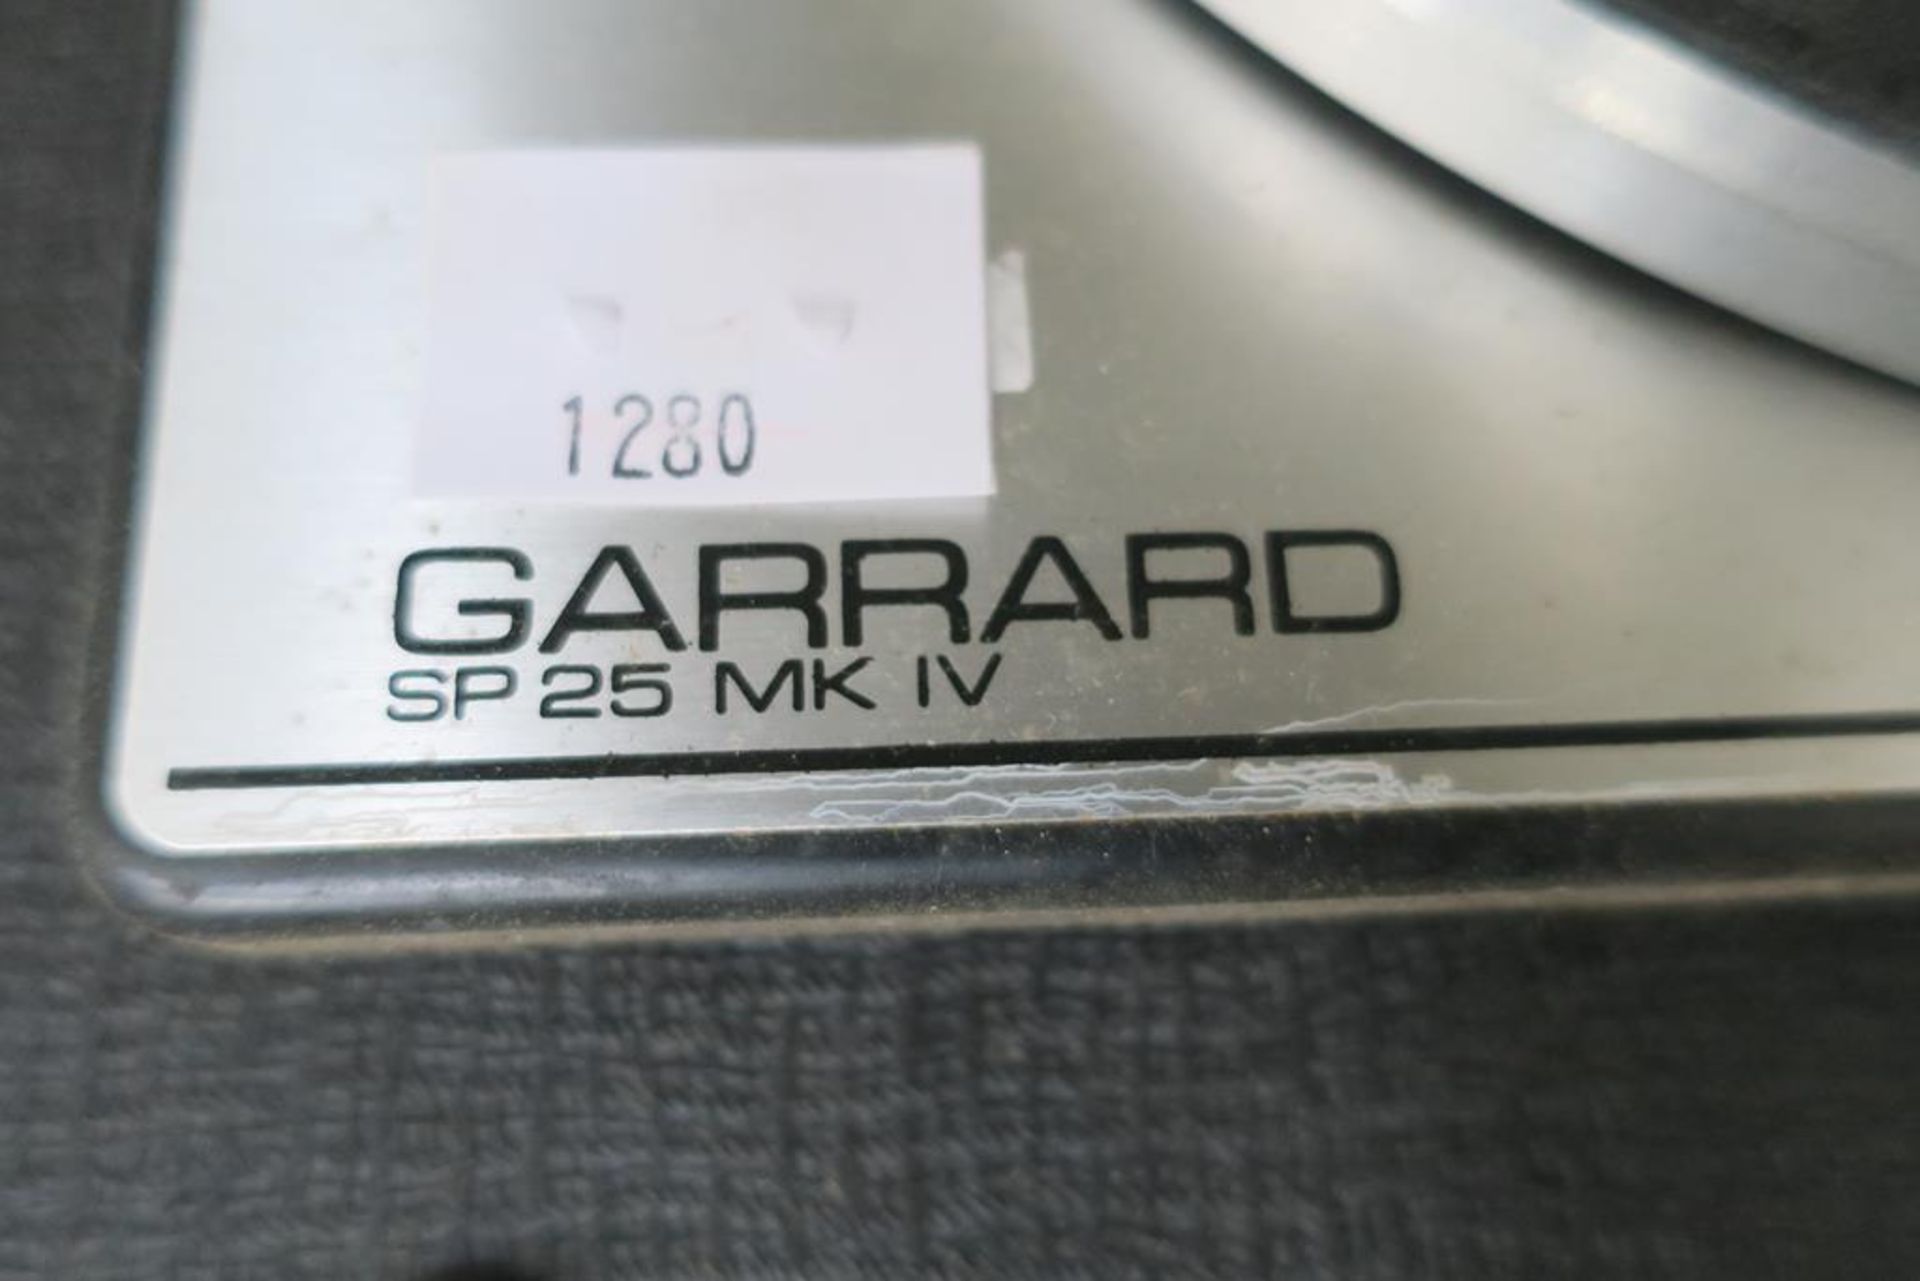 A Garrard SP 25 MK IV Record Deck - Image 2 of 2